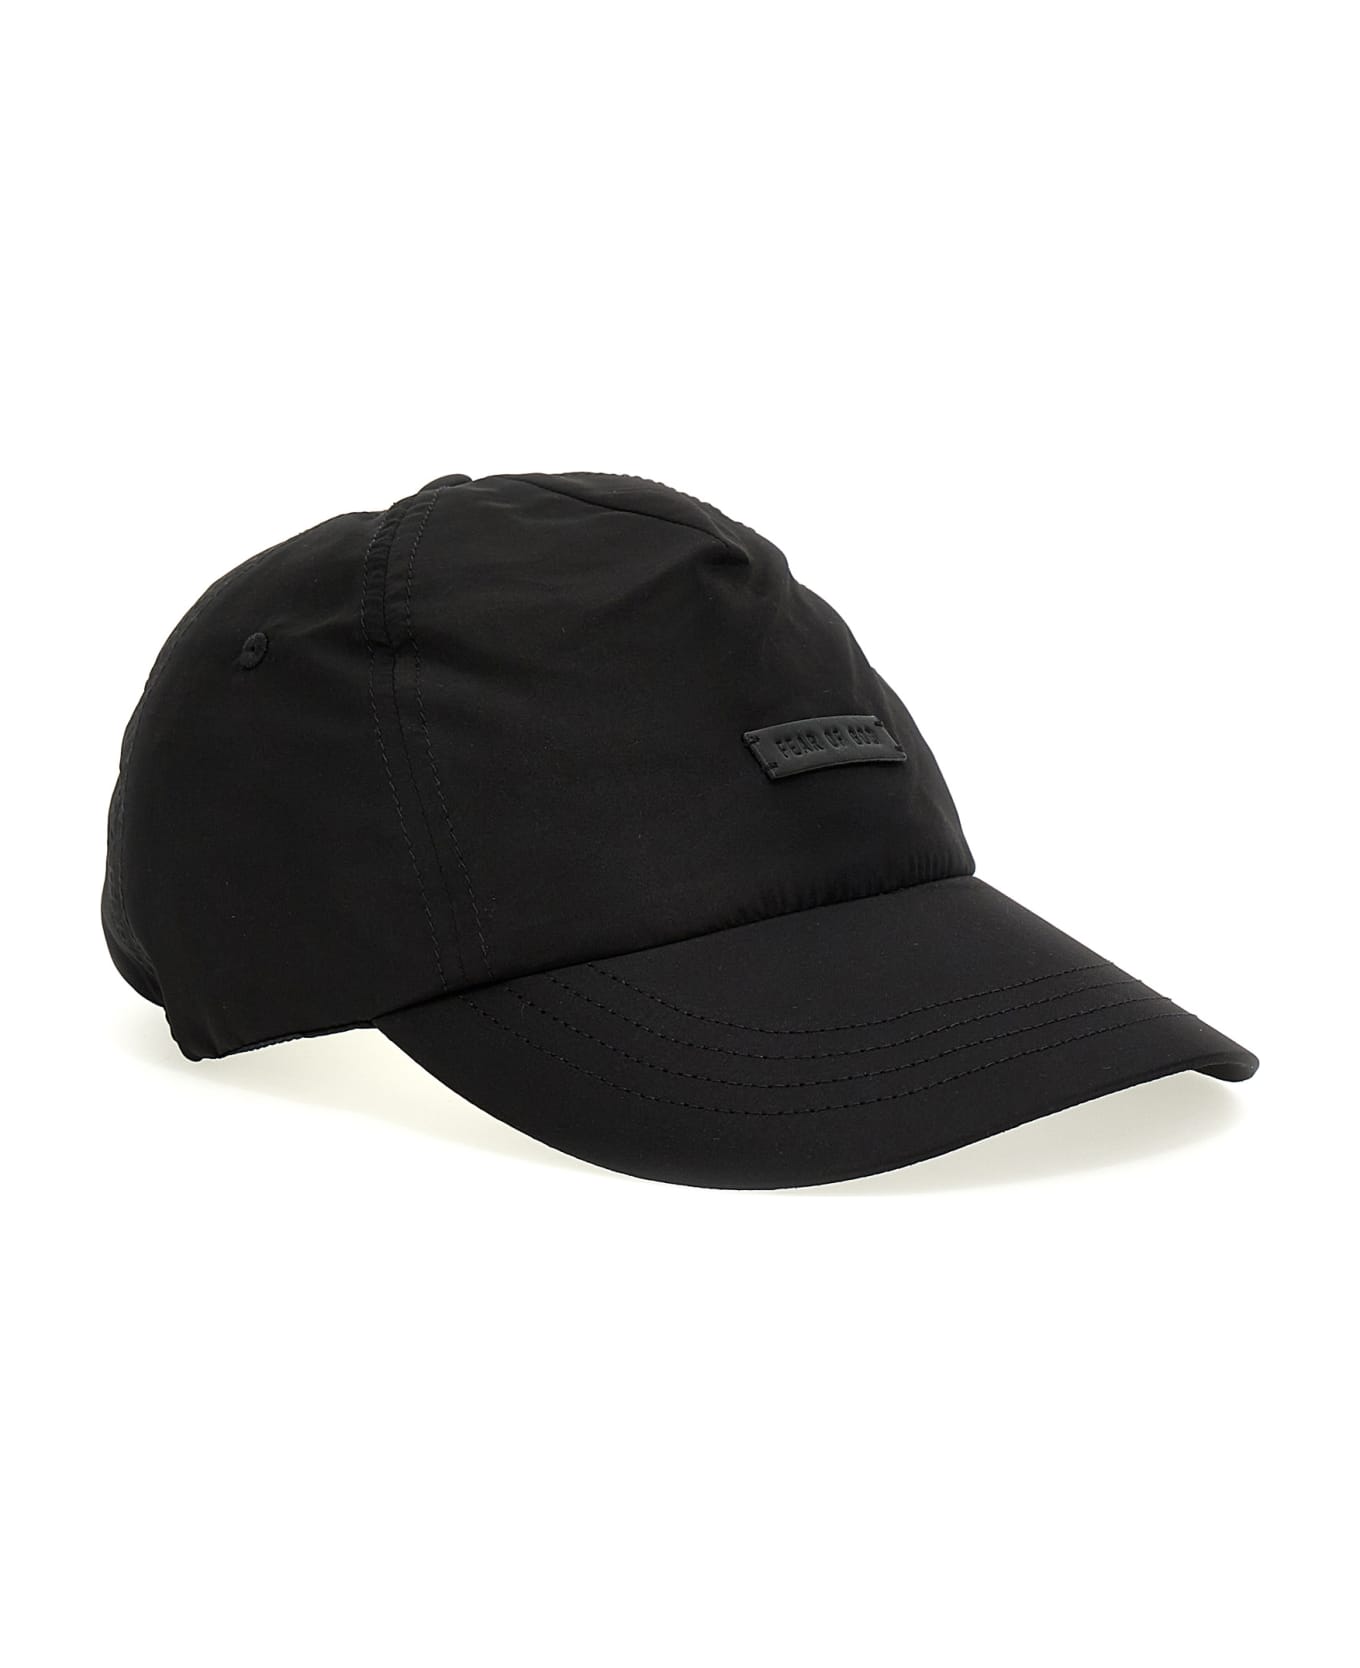 Fear of God Logo Patch Baseball Cap - Black   帽子